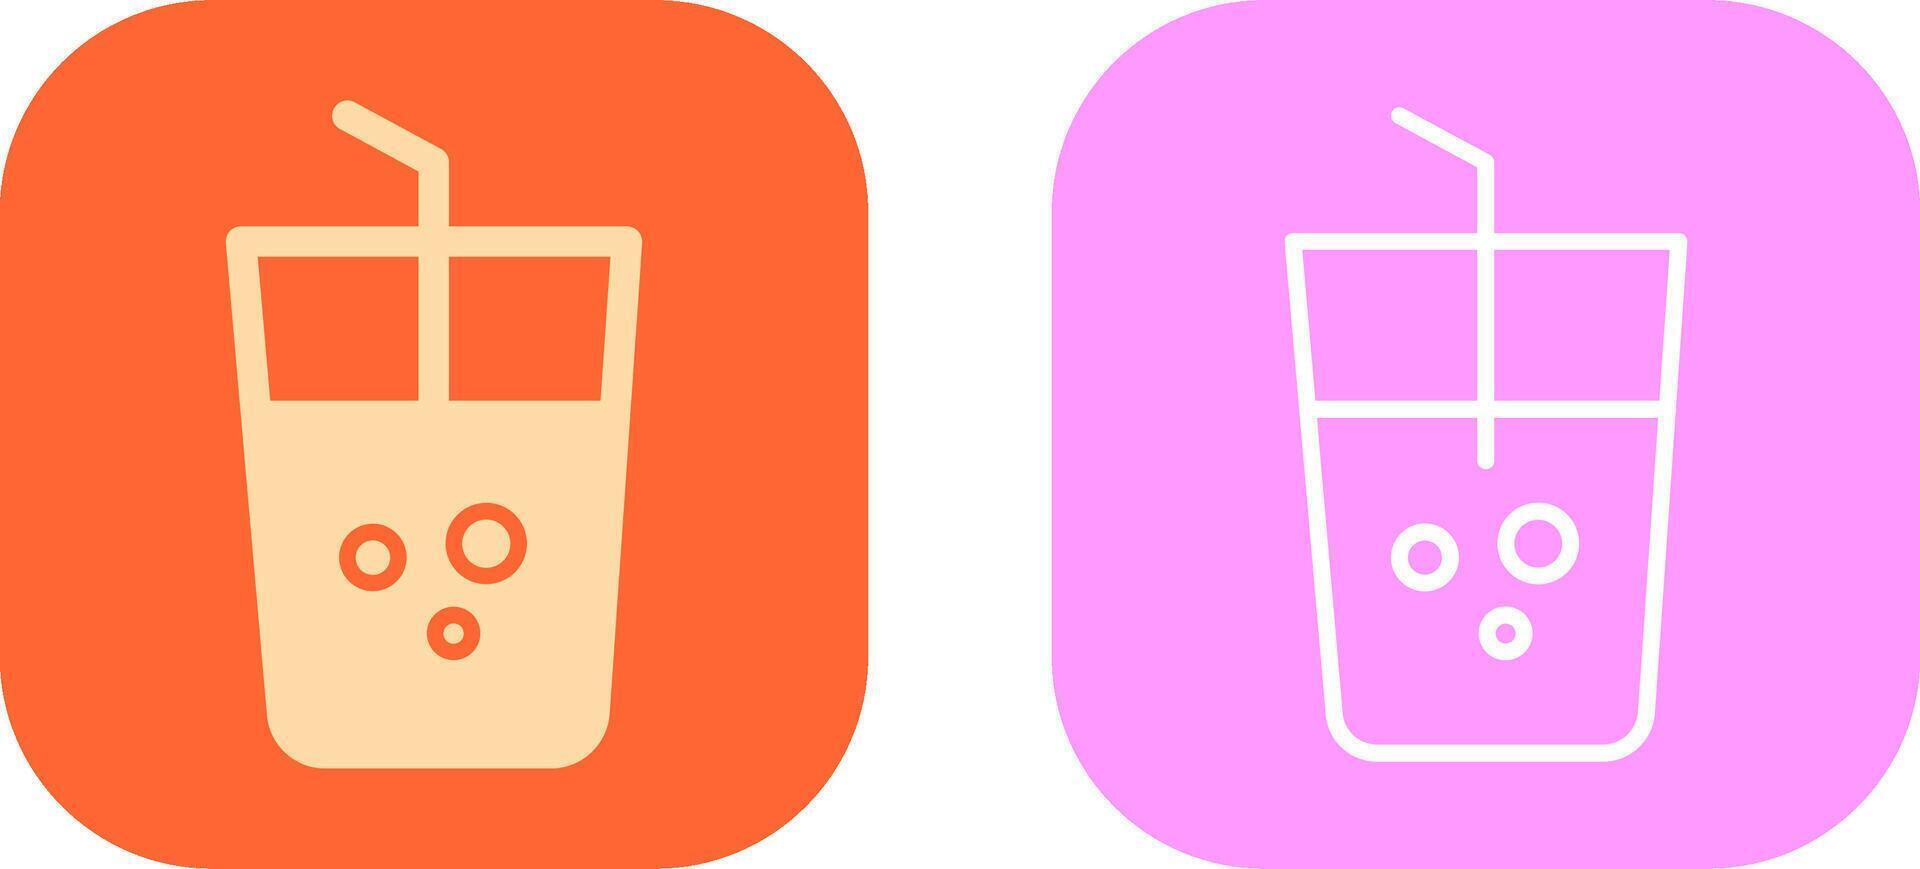 Soda Icon Design vector